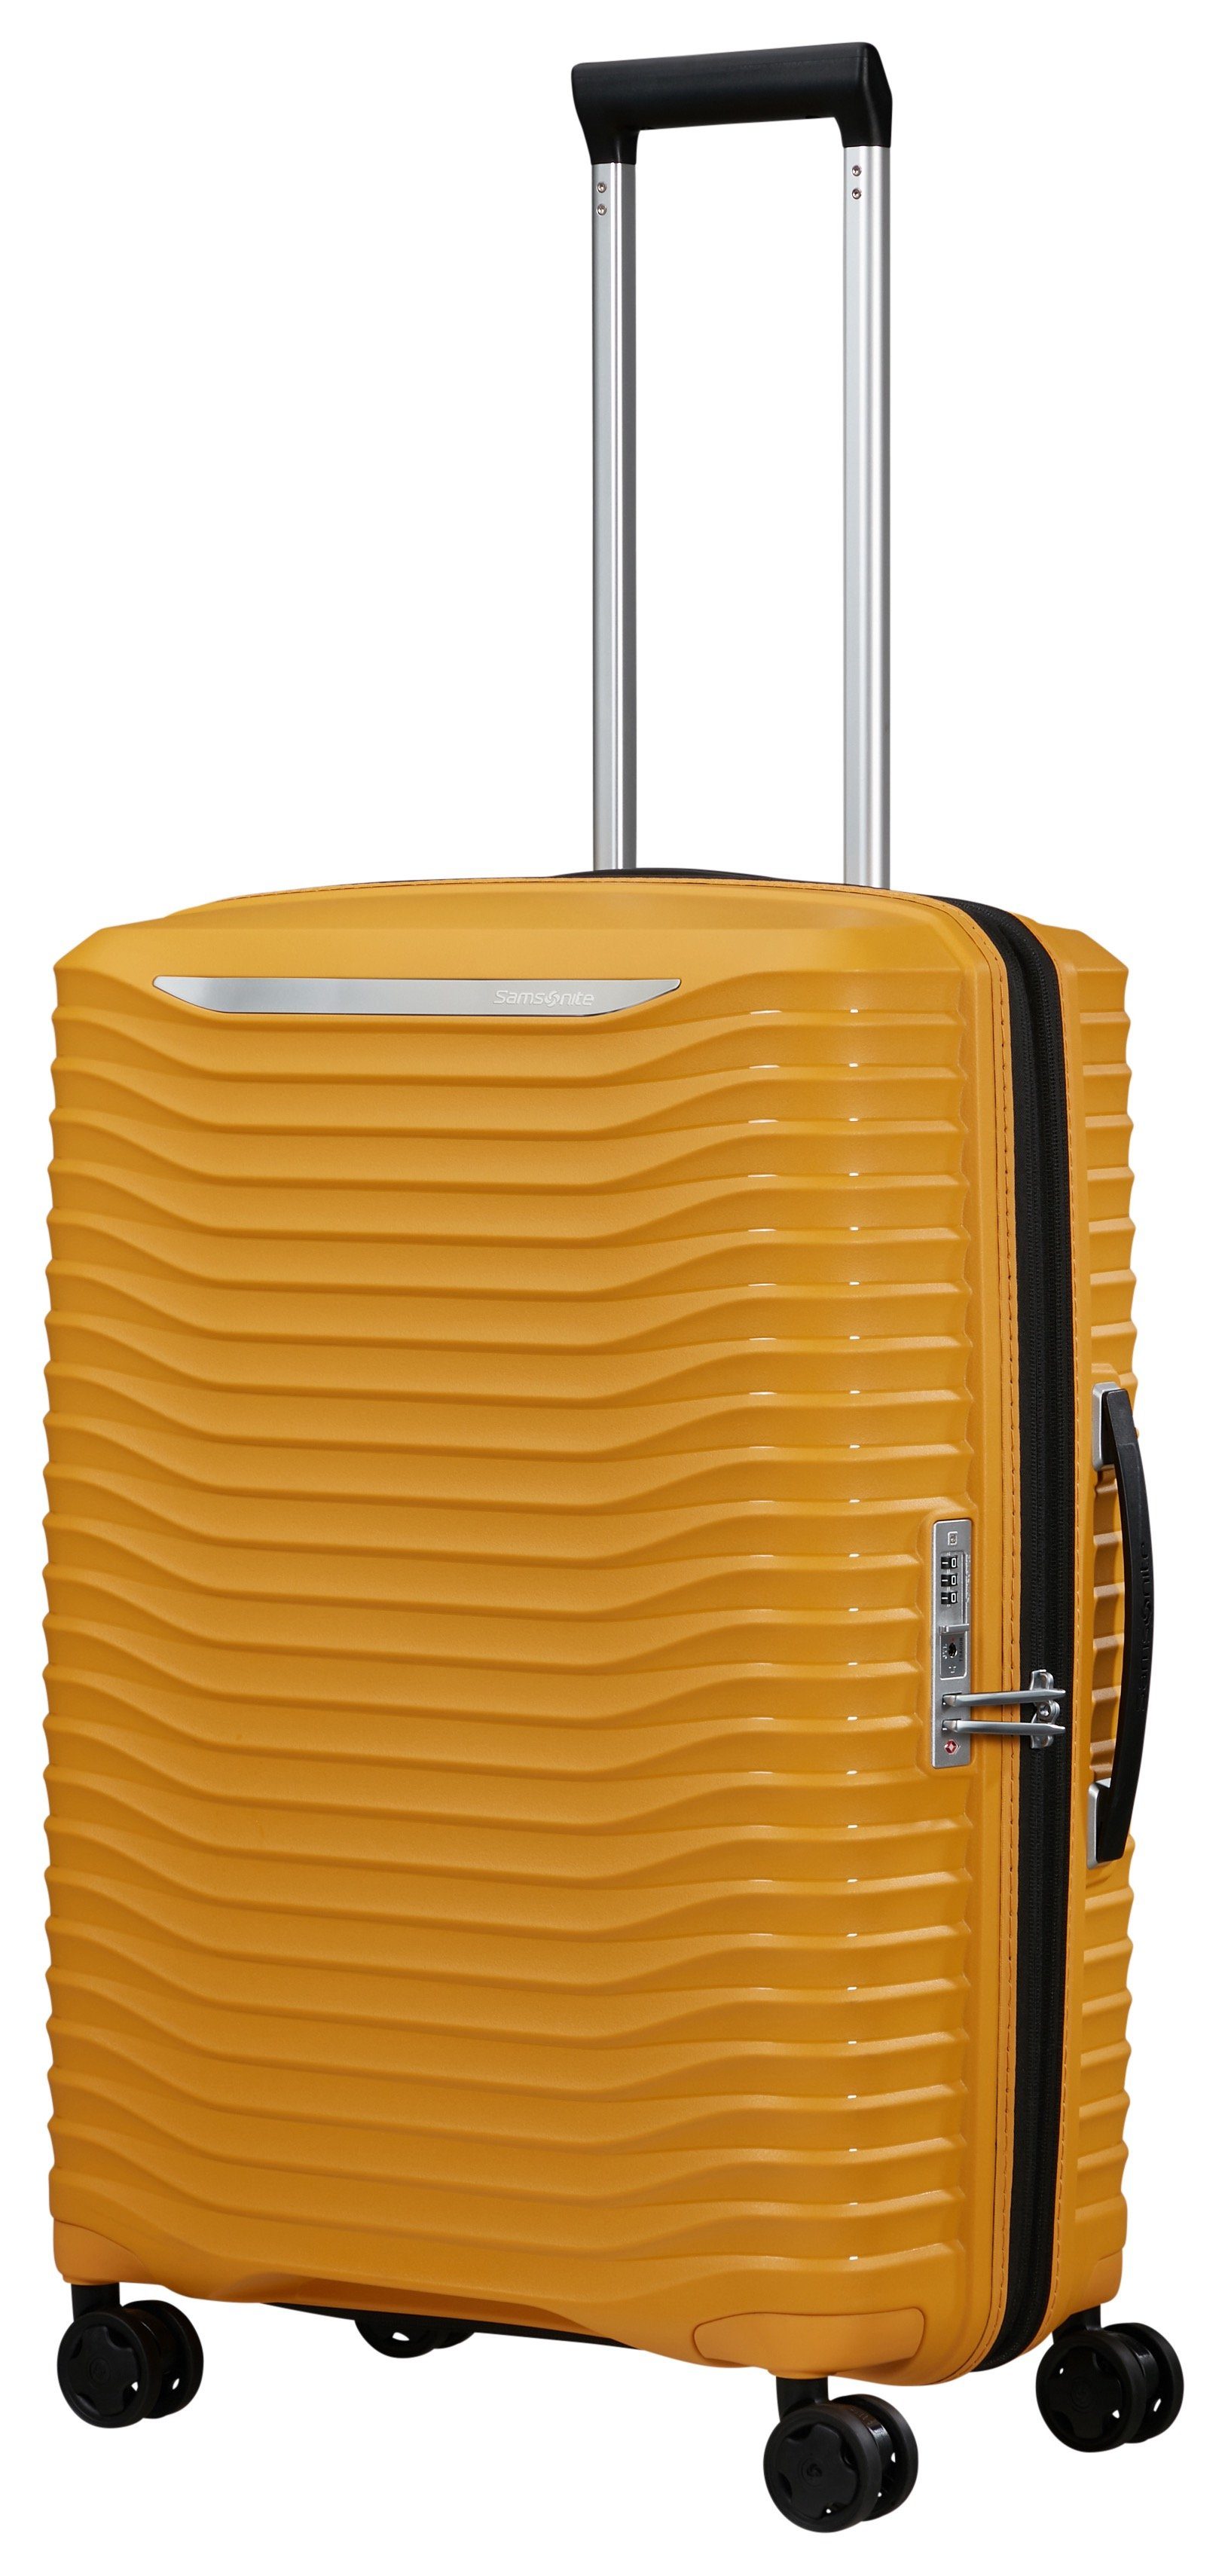 Samsonite Koffer UPSCAPE 68, 4 Rollen, Trolley, Reisegepäck Reisekoffer Hartschalenkoffer TSA-Zahlenschloss